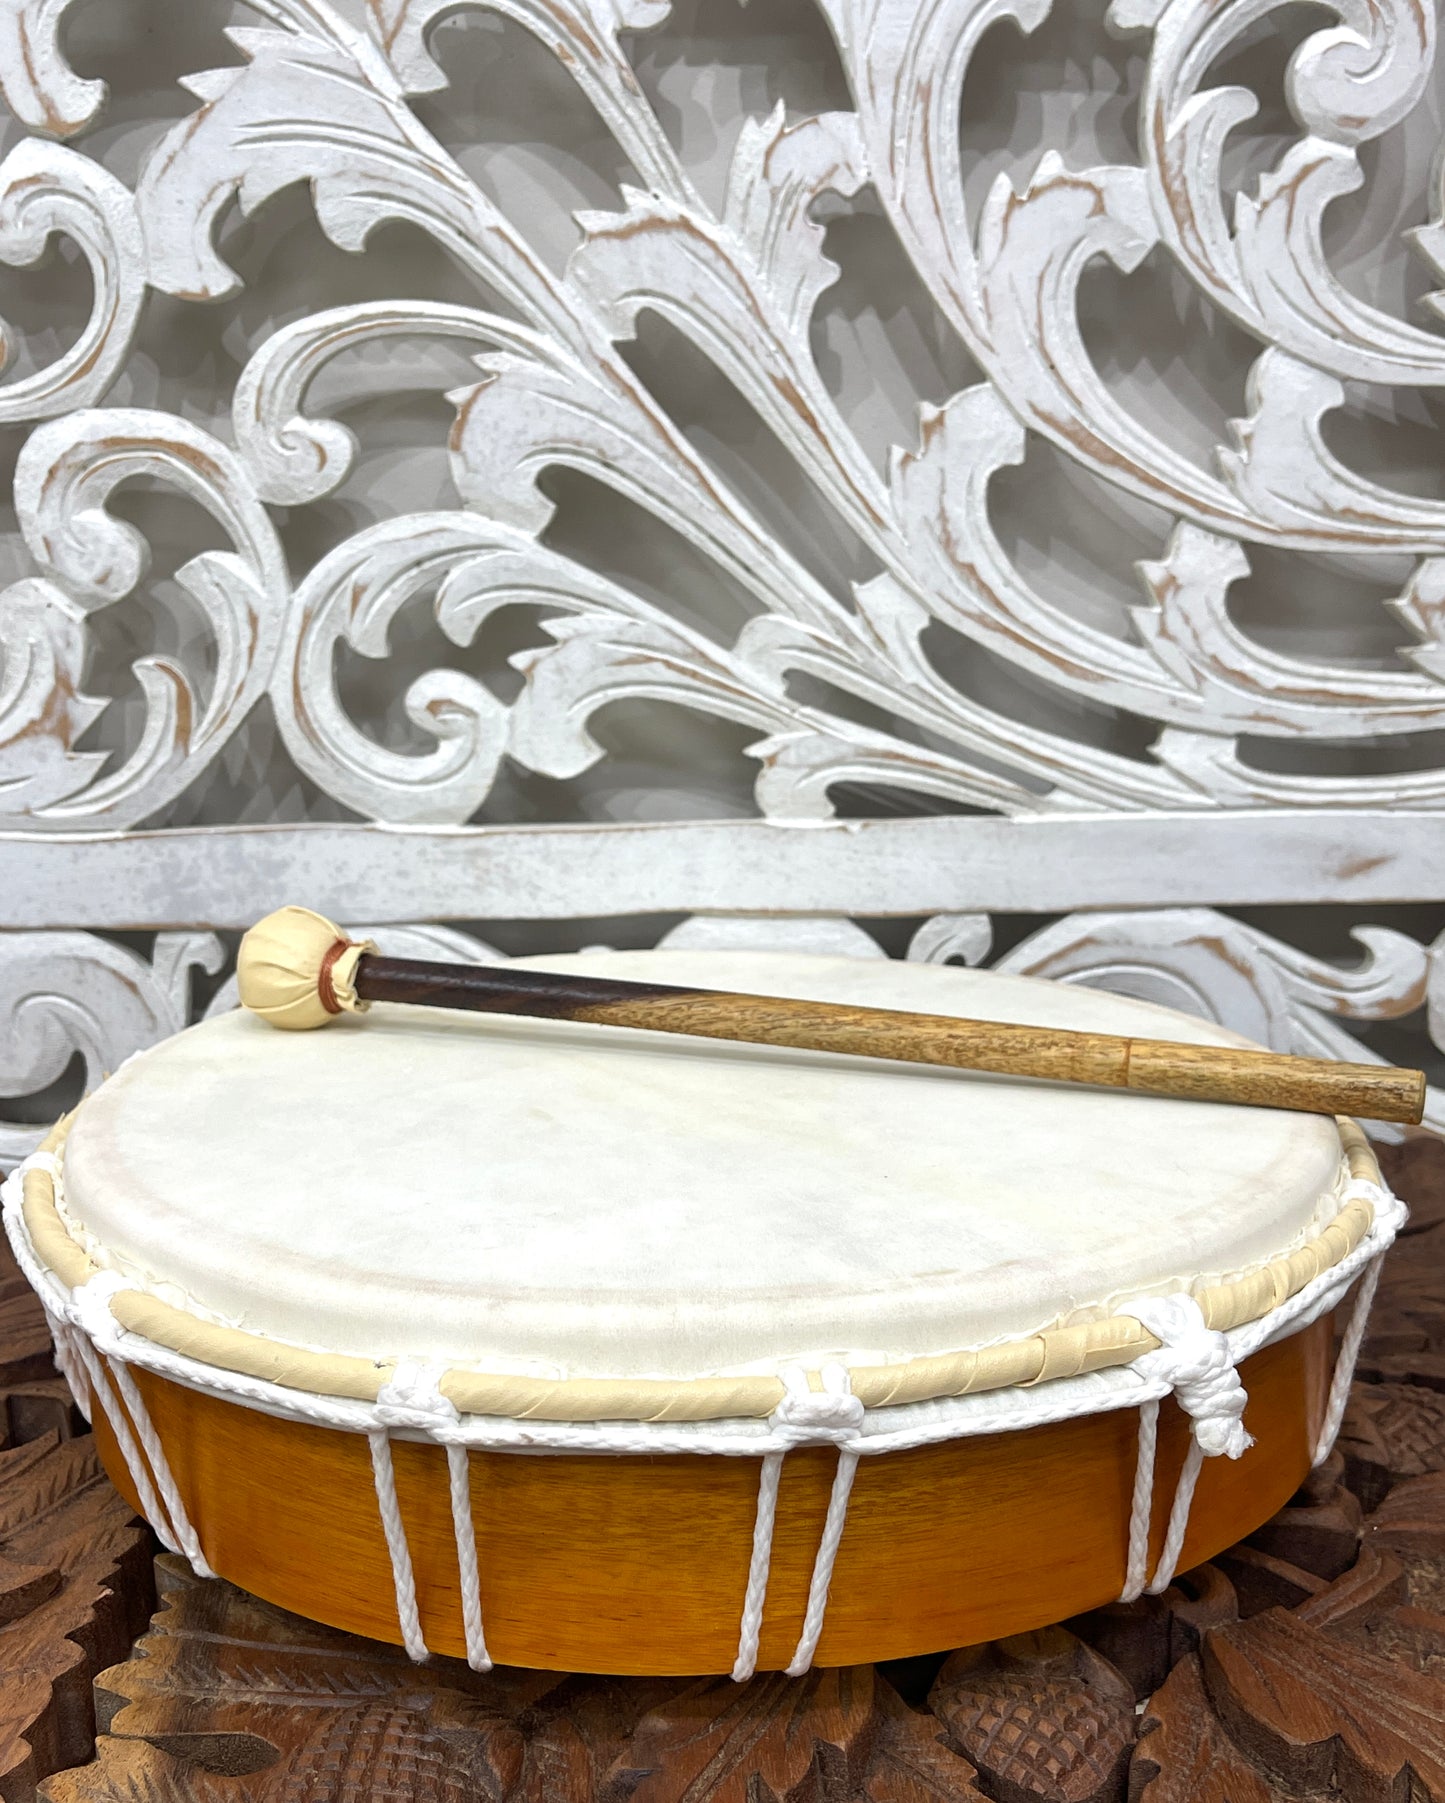 Bodhran Hand Drums